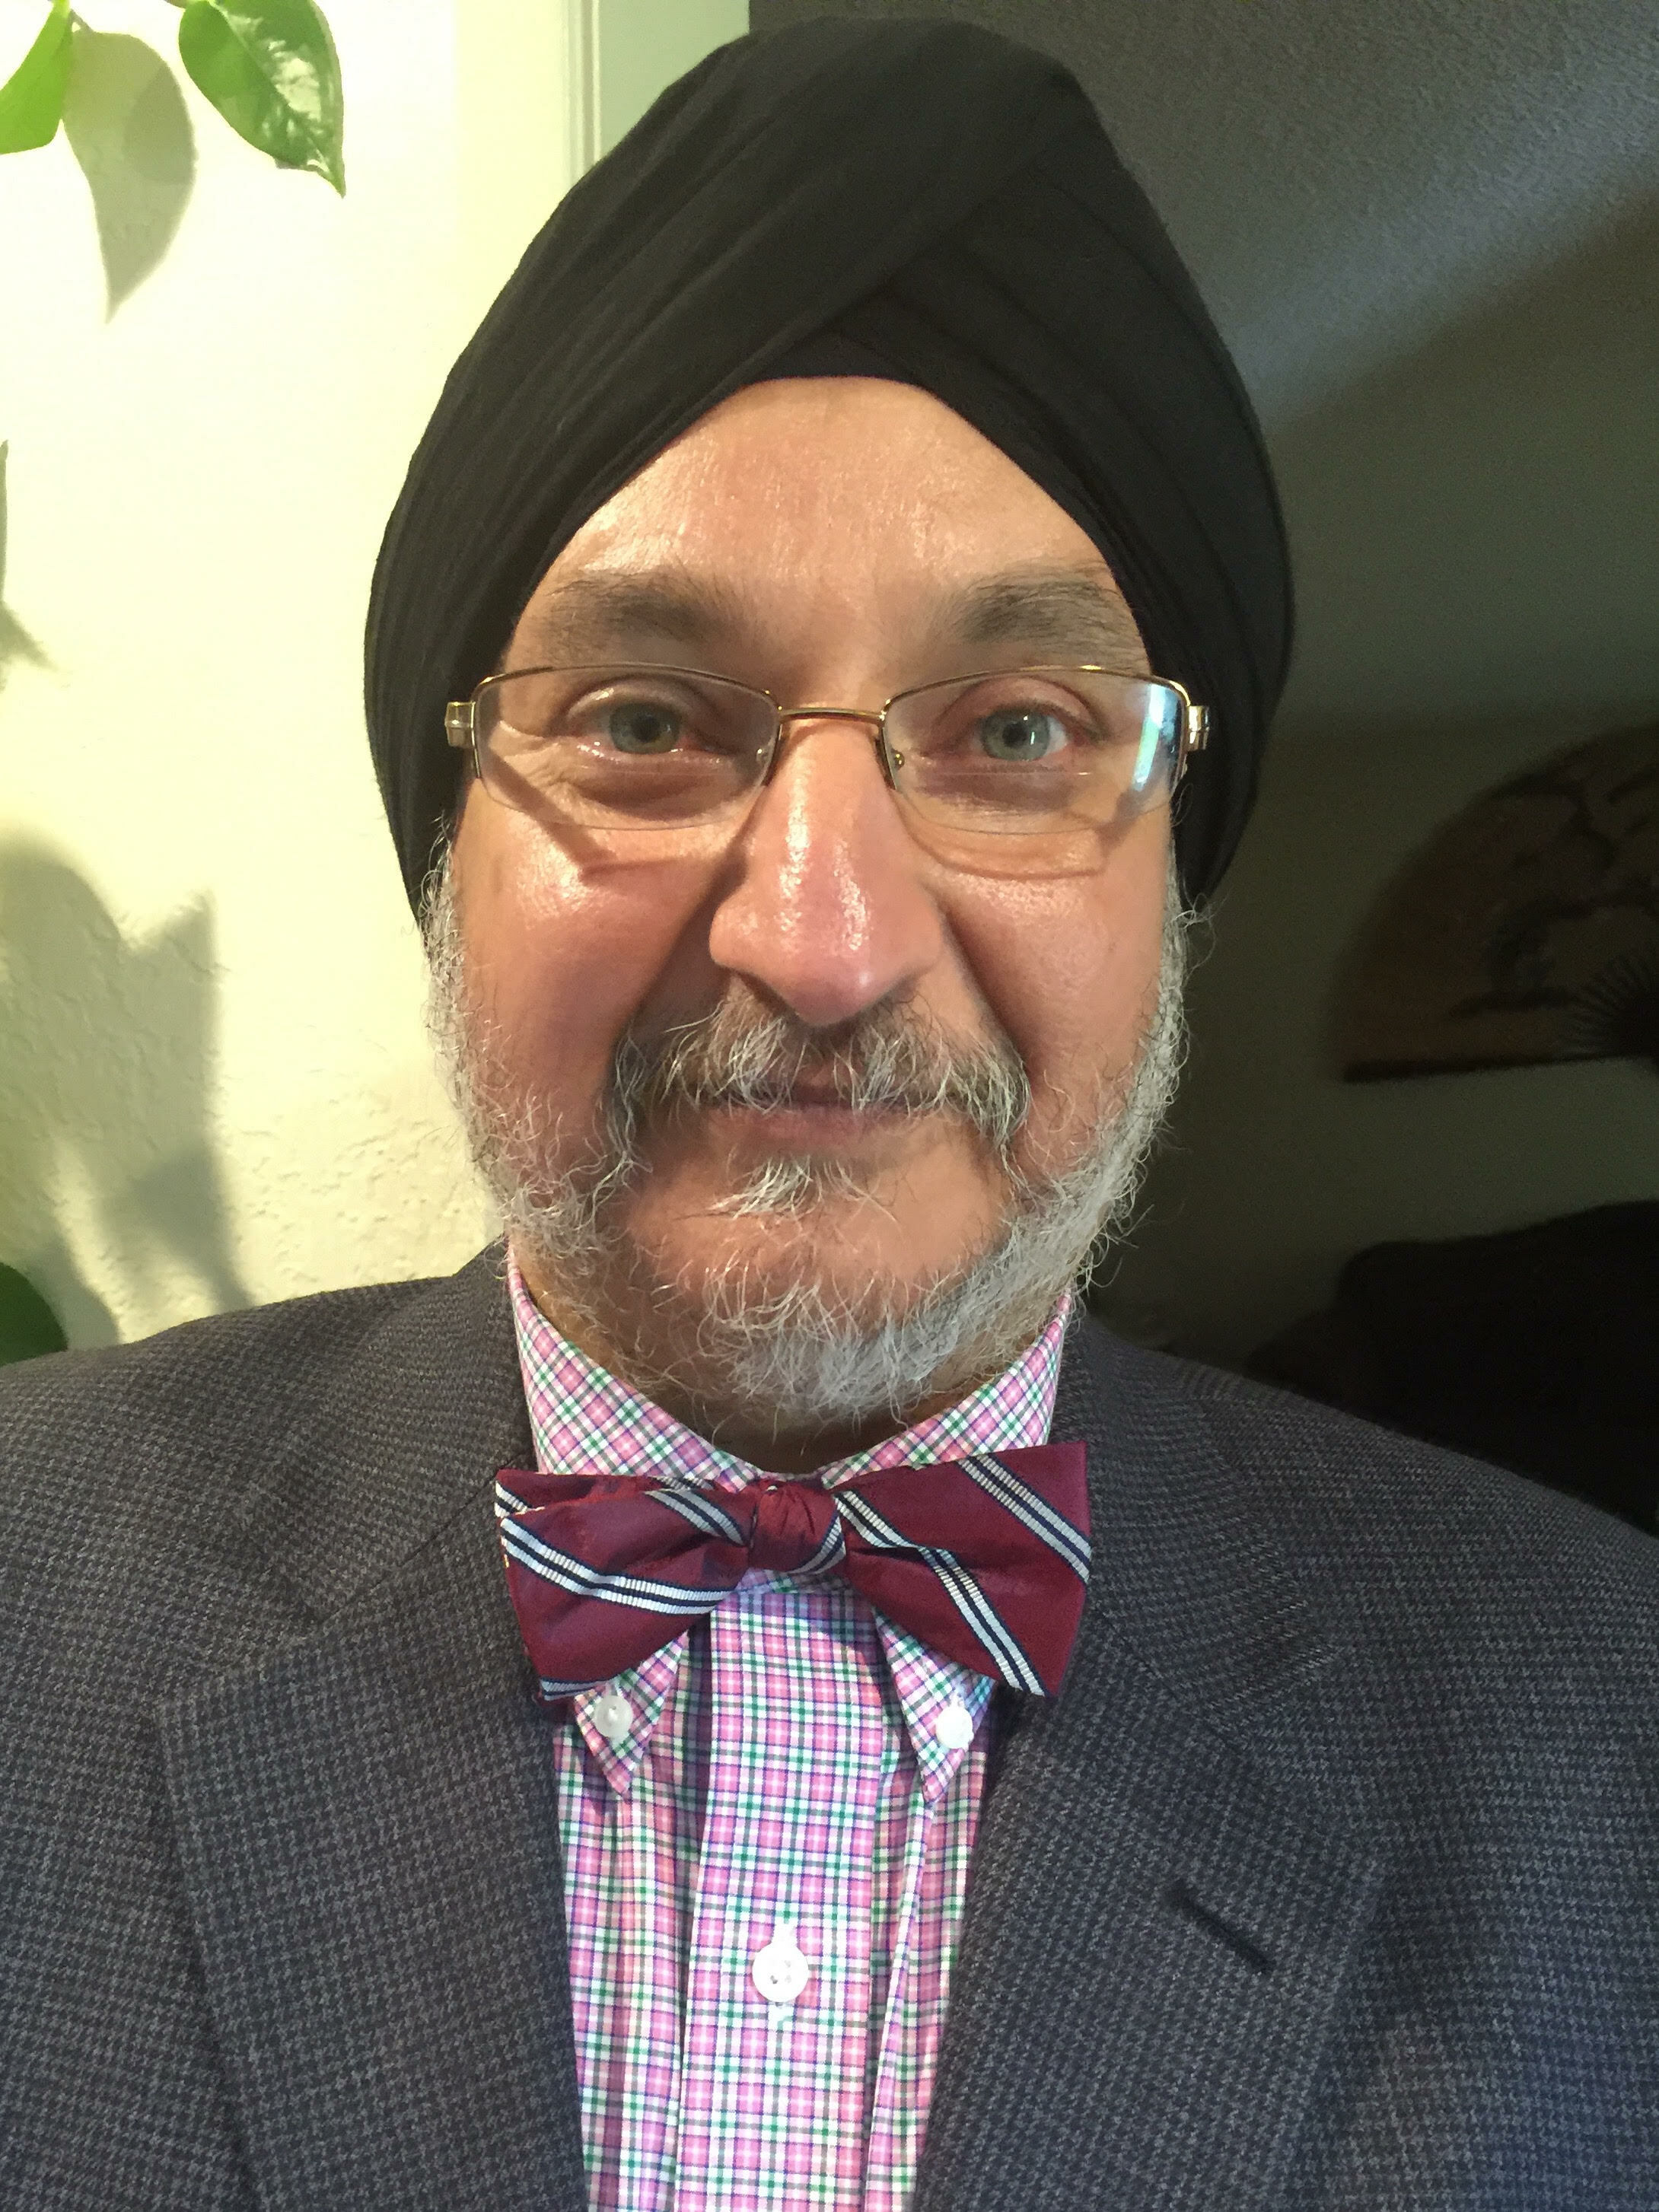 Parmjit Singh, Real Estate Salesperson in Walnut Creek, Reliance Partners